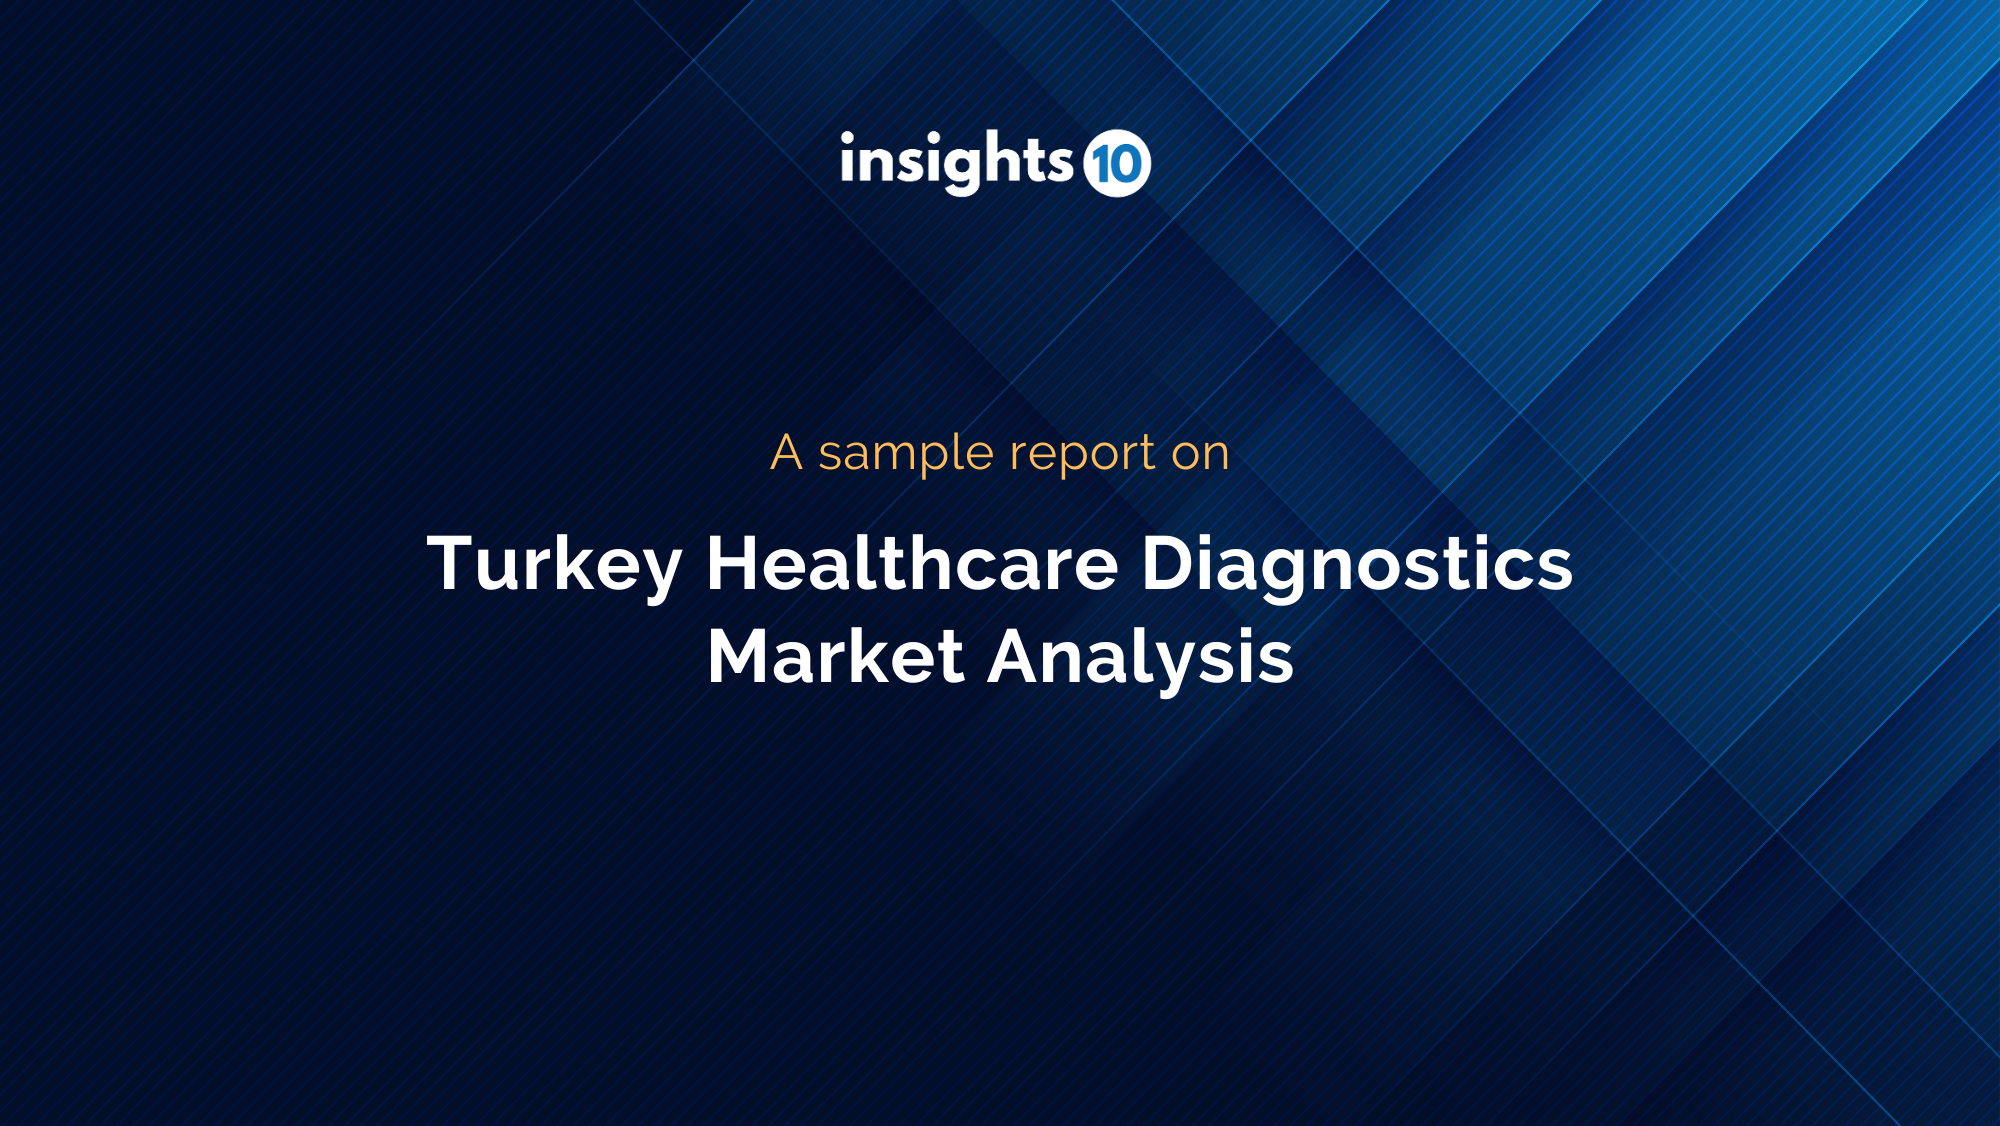 Turkey Healthcare Diagnostics Market Analysis Sample Report 